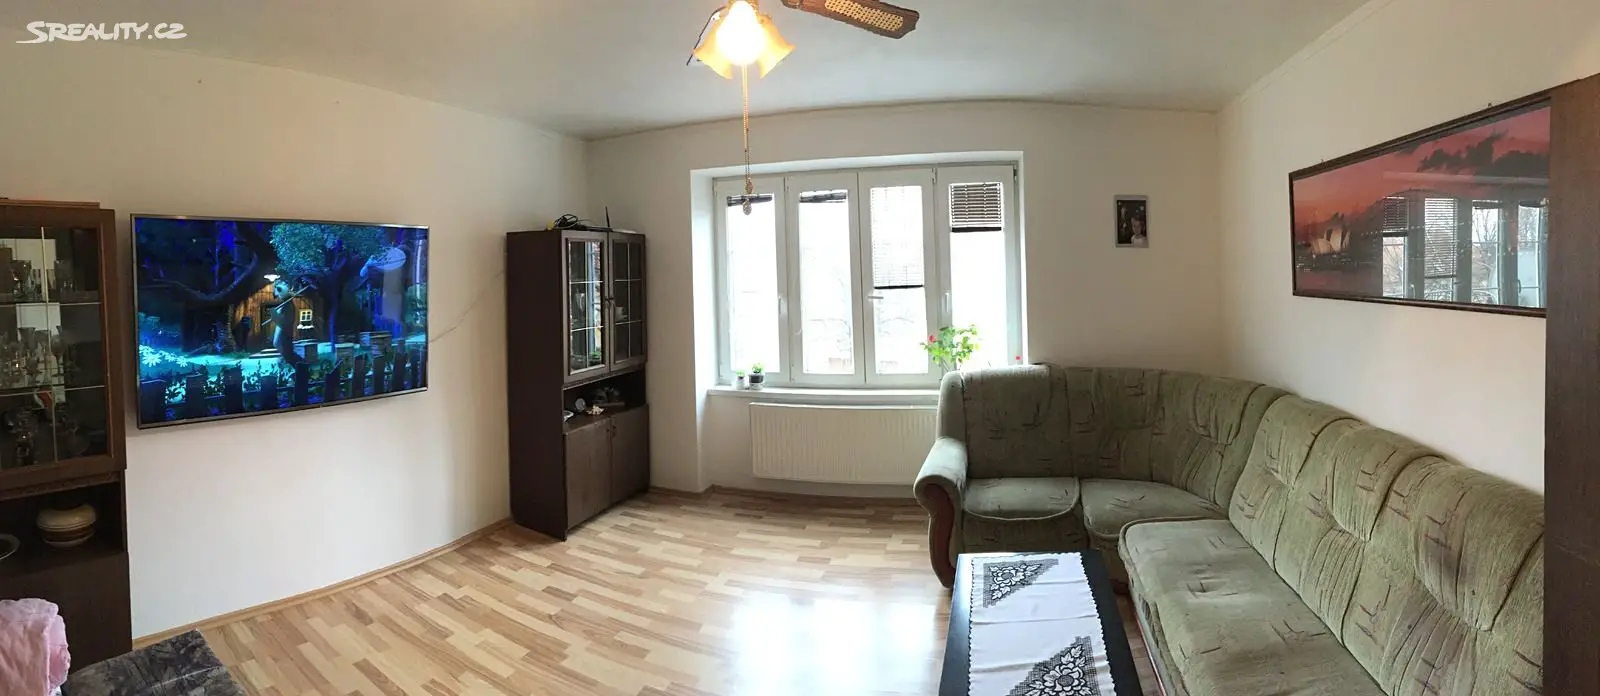 Pronájem bytu 2+1 69 m², Mikulov, okres Břeclav